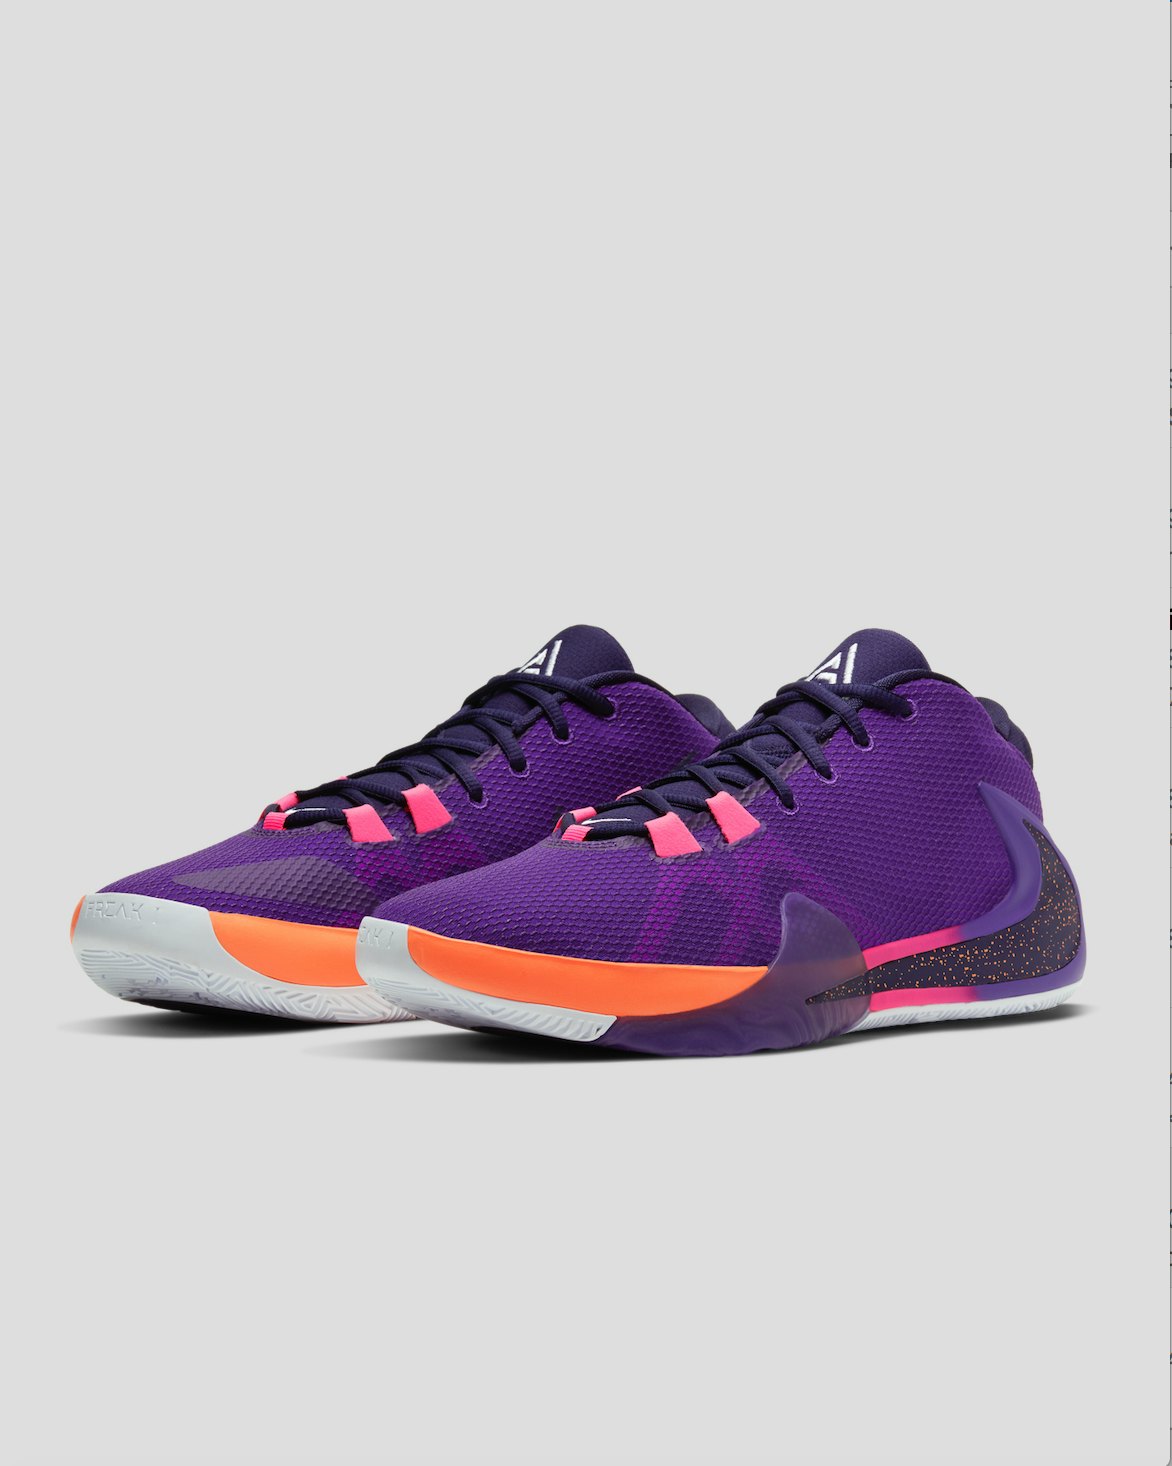 2k basketball shoes